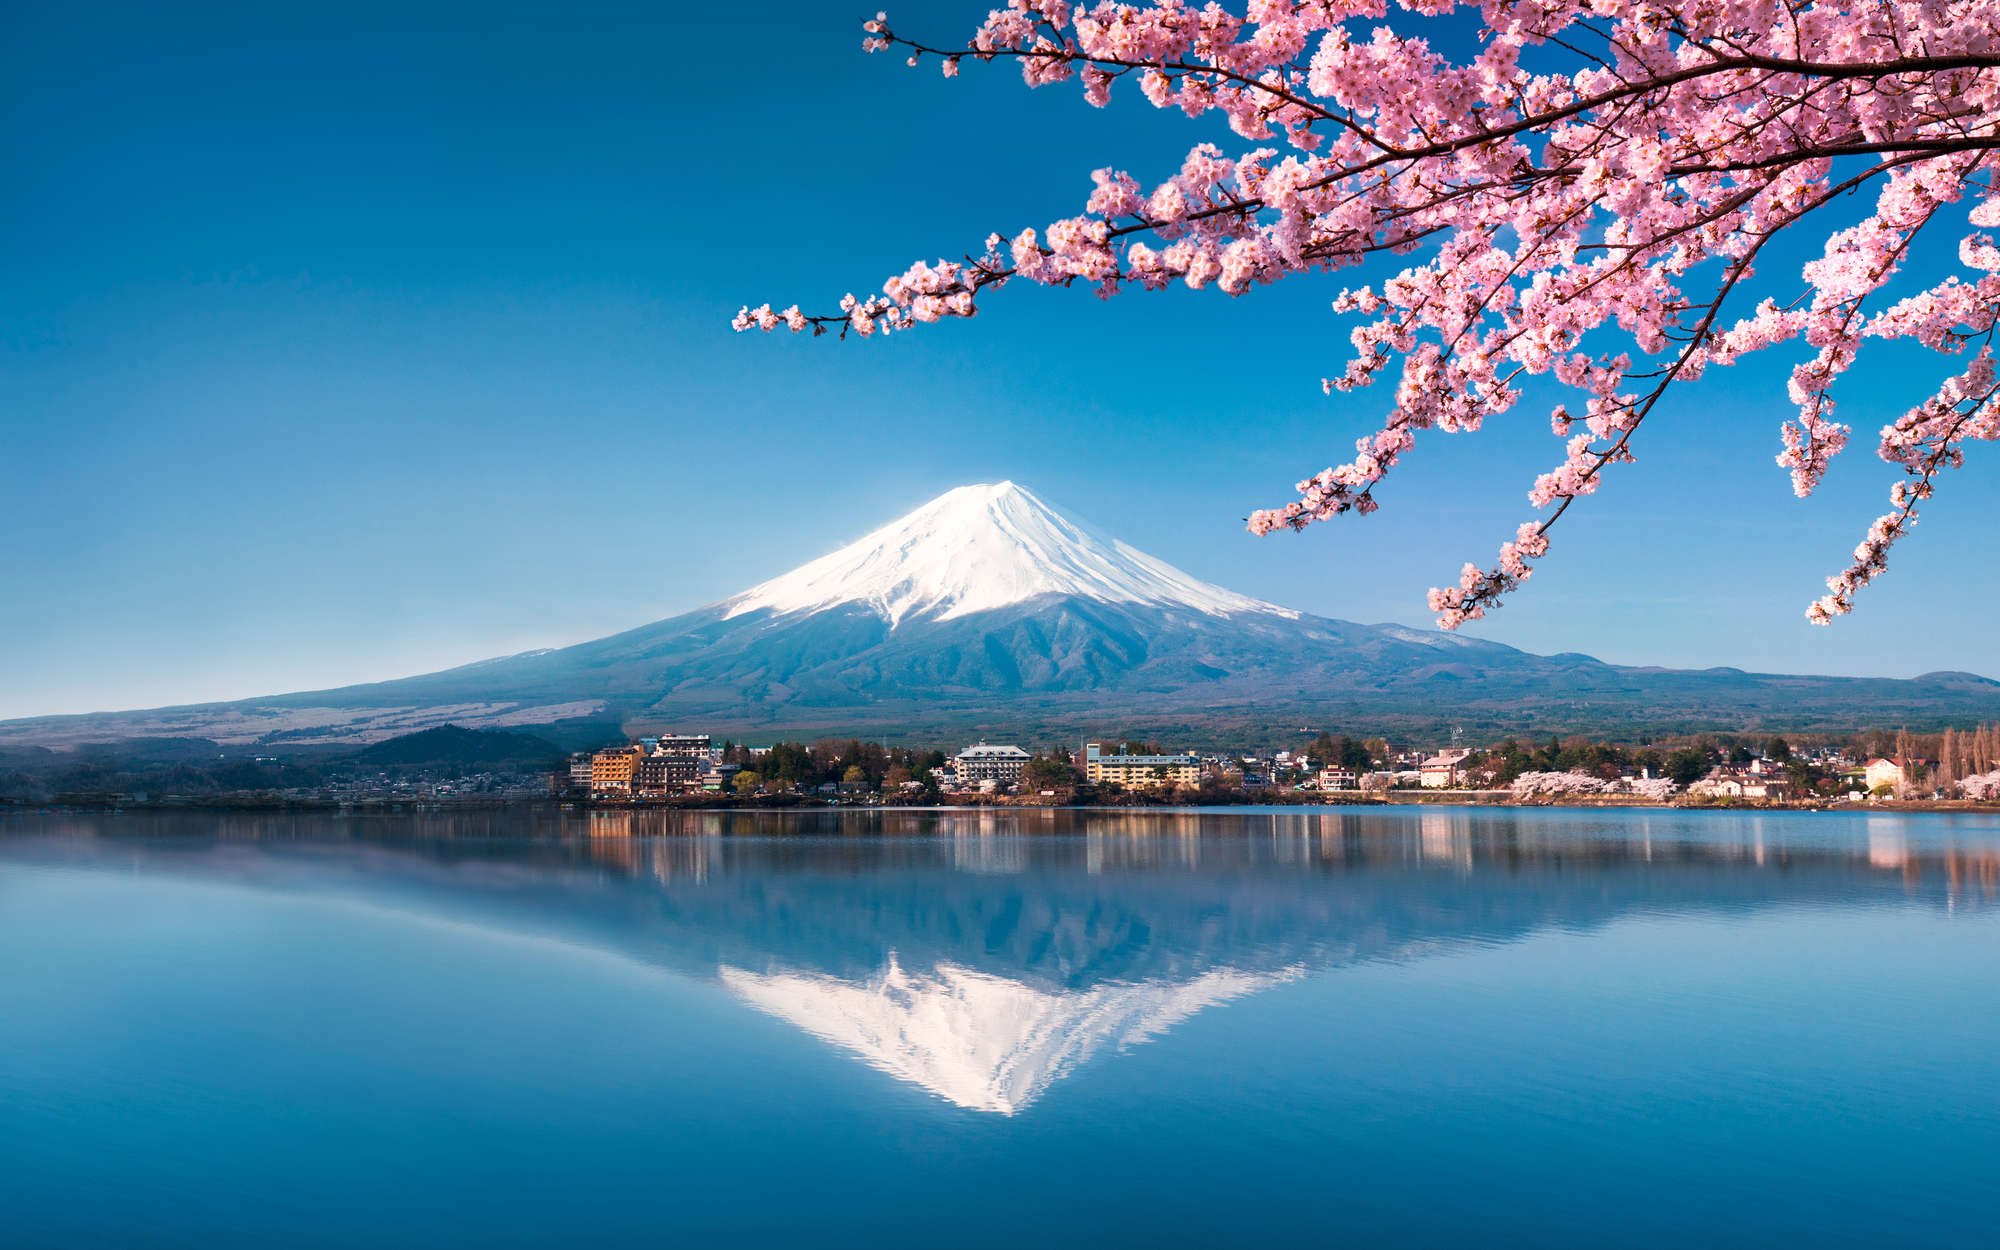             Fototapete Vulkan Fuji in Japan – Perlmutt Glattvlies
        